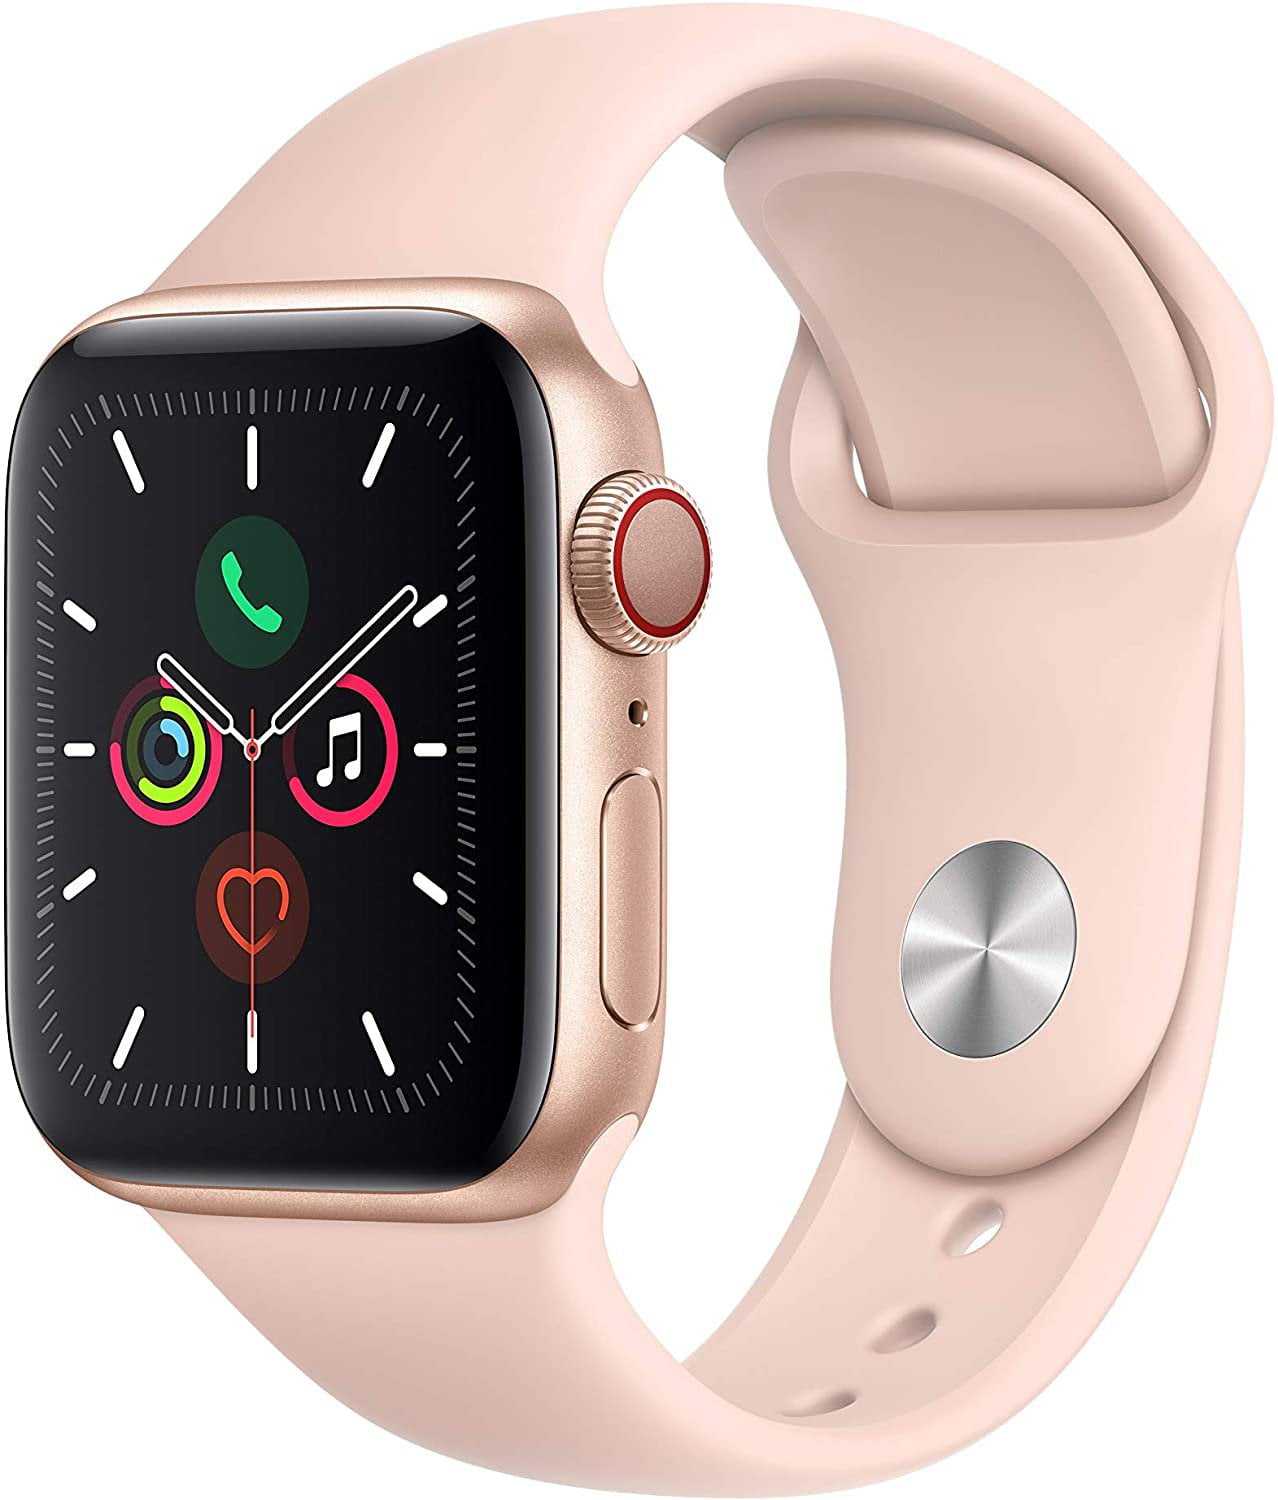 apple watch หรือ garmin connect